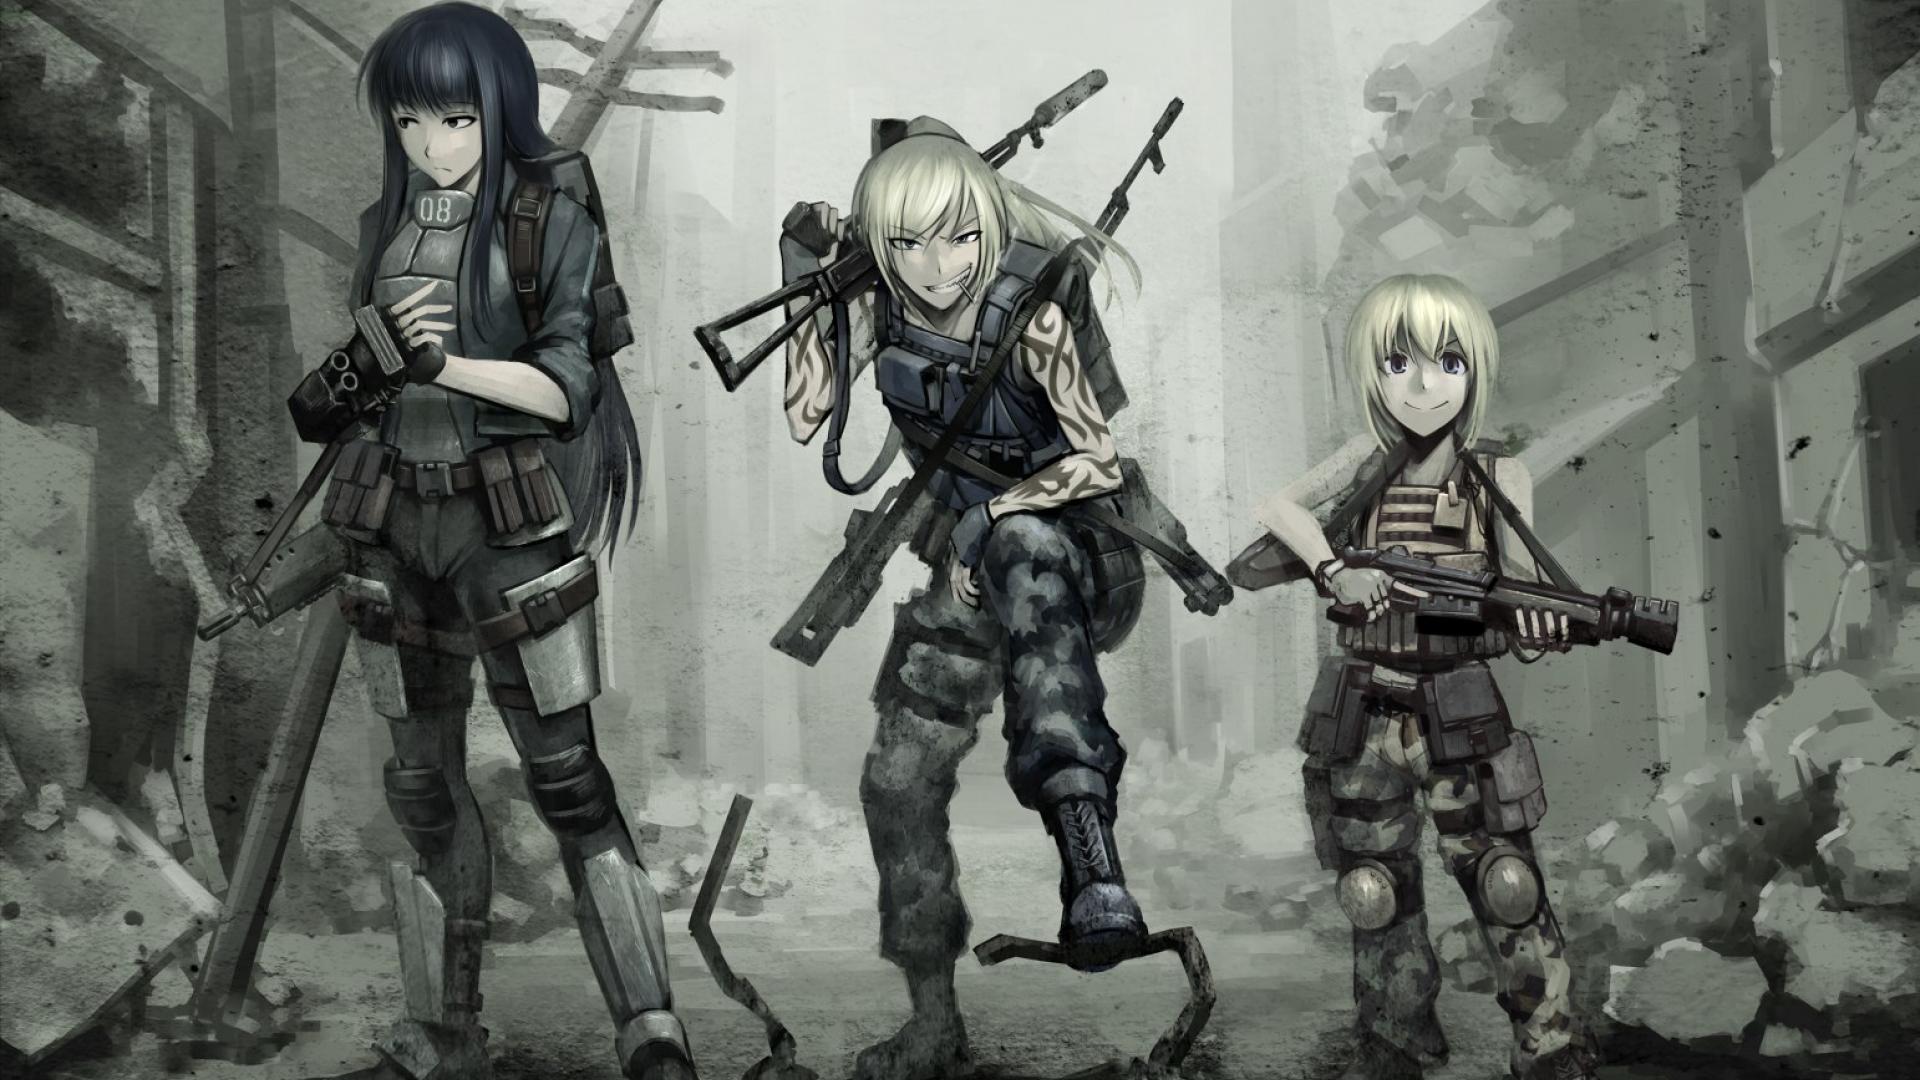 Girl With Gun Anime Wallpapers